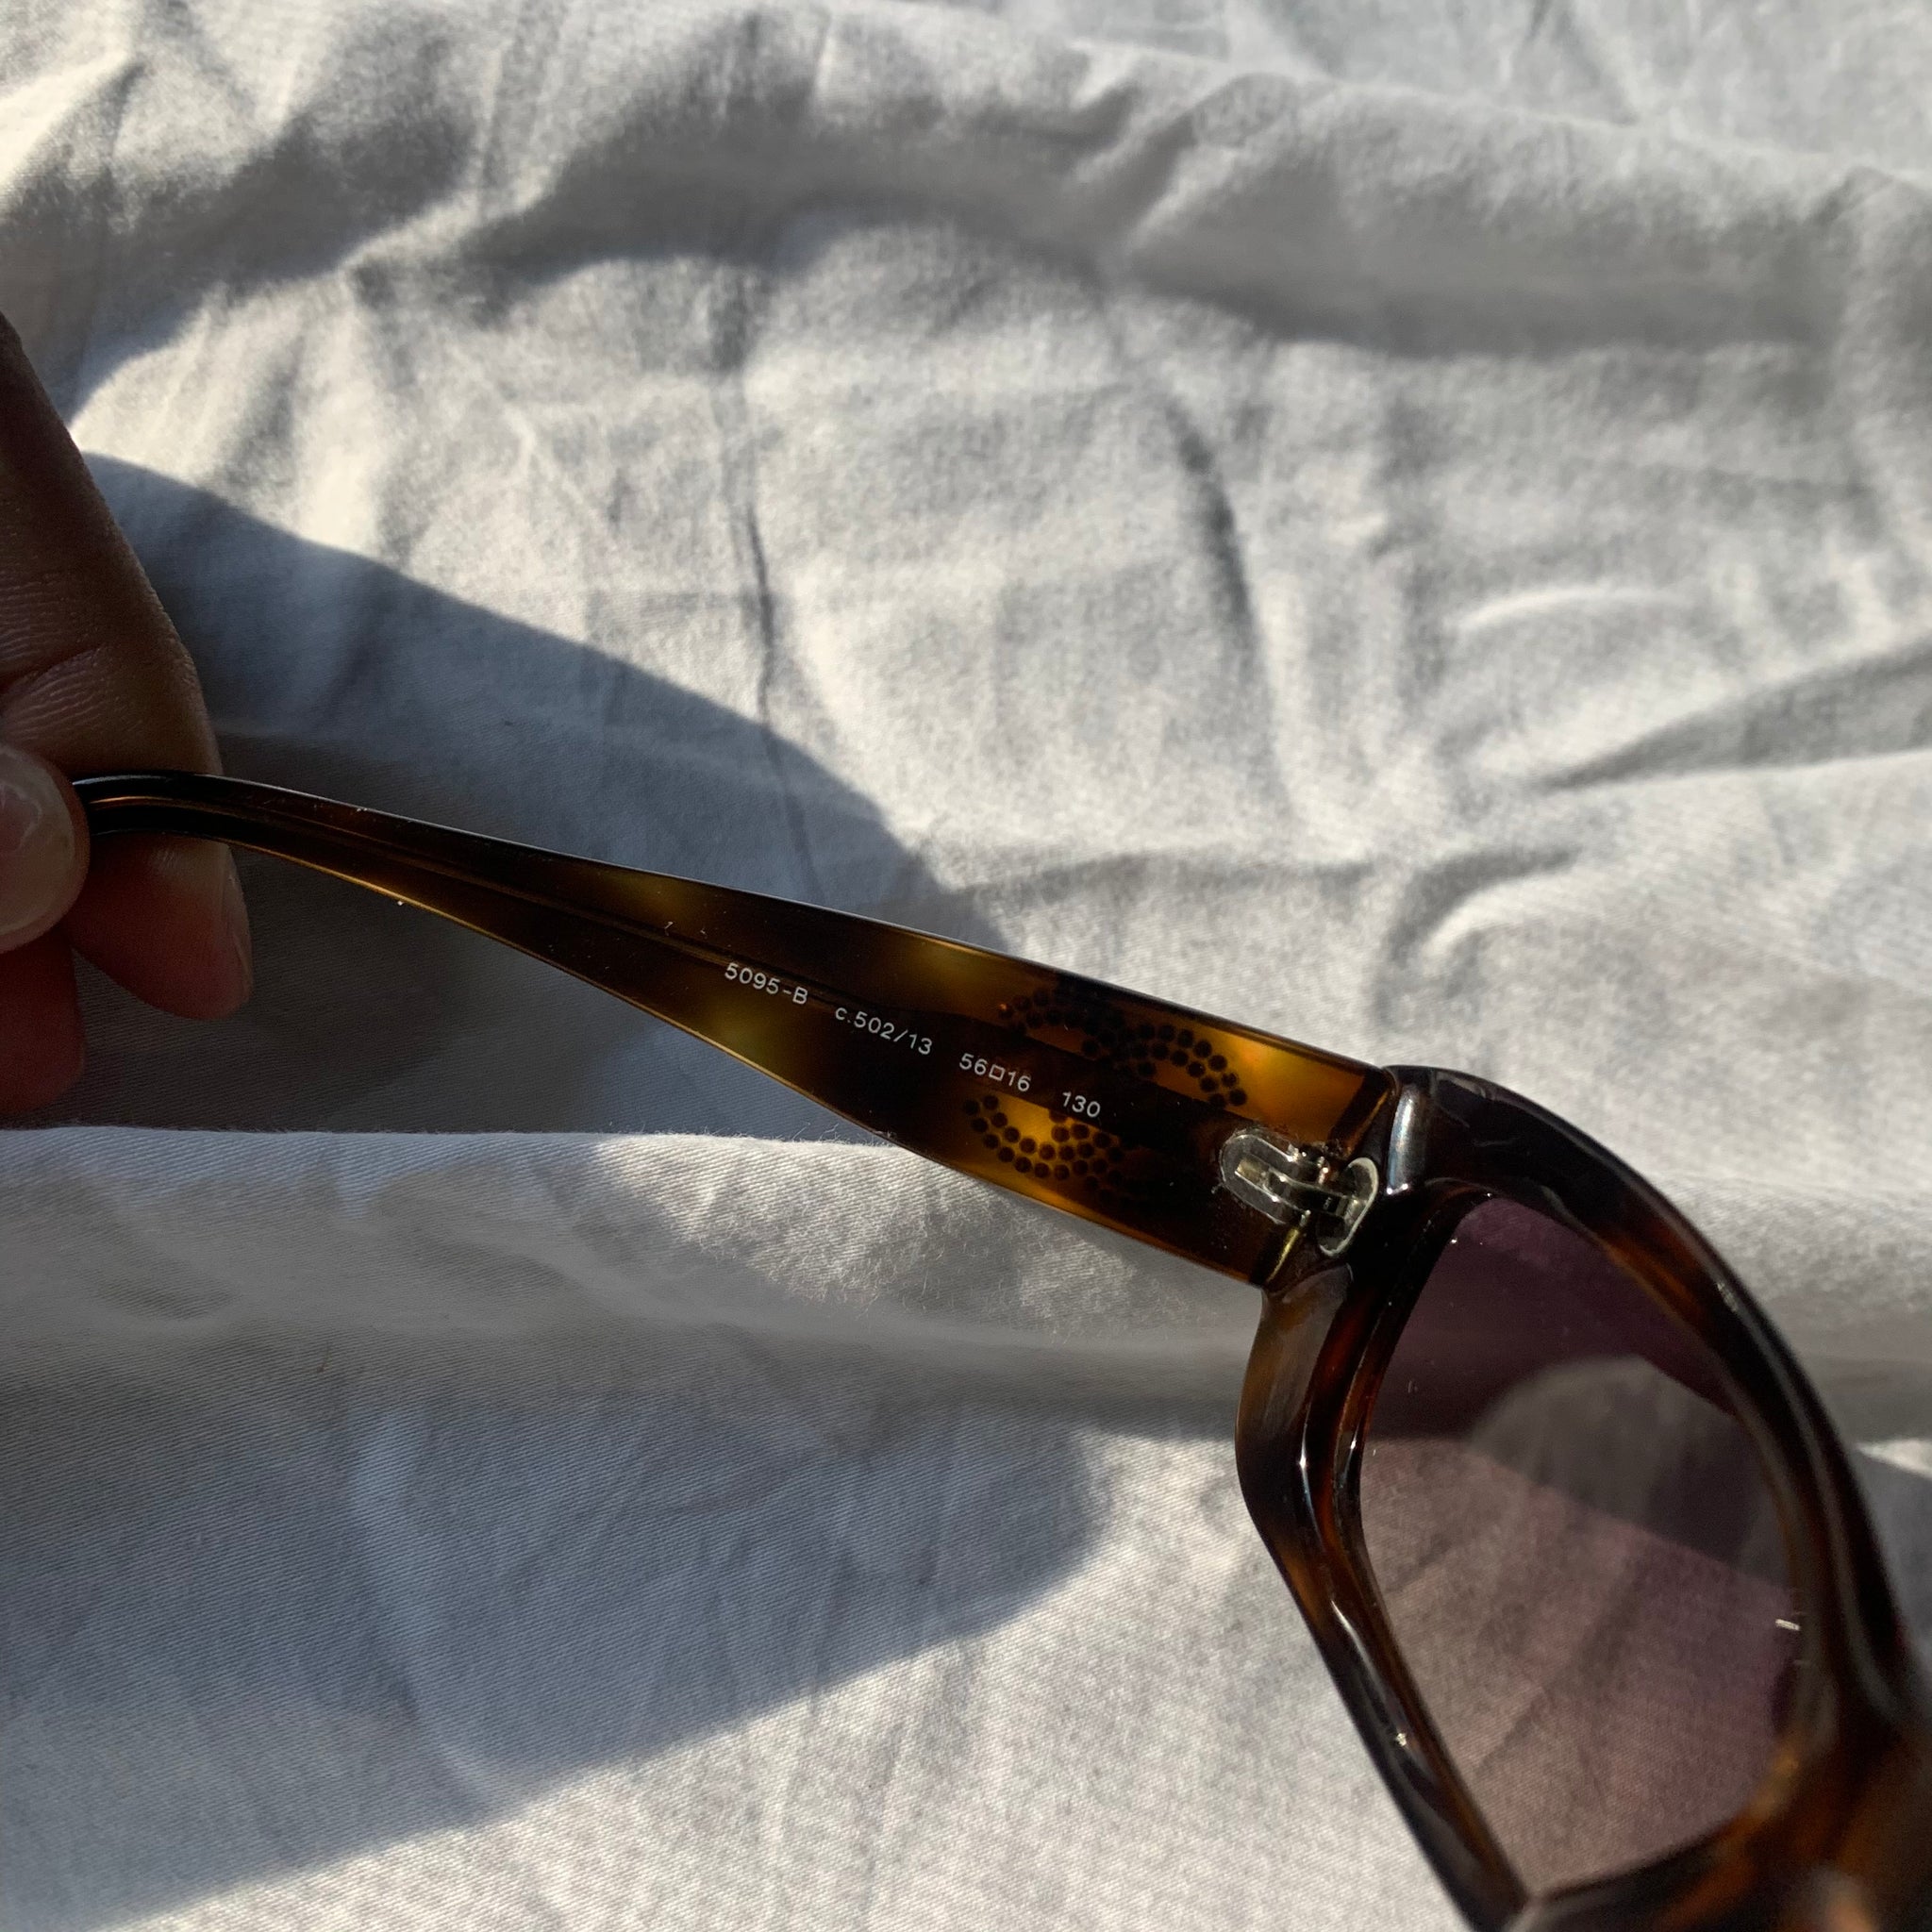 Authentic Chanel Rectangular Rhinestone Logo Sunglasses